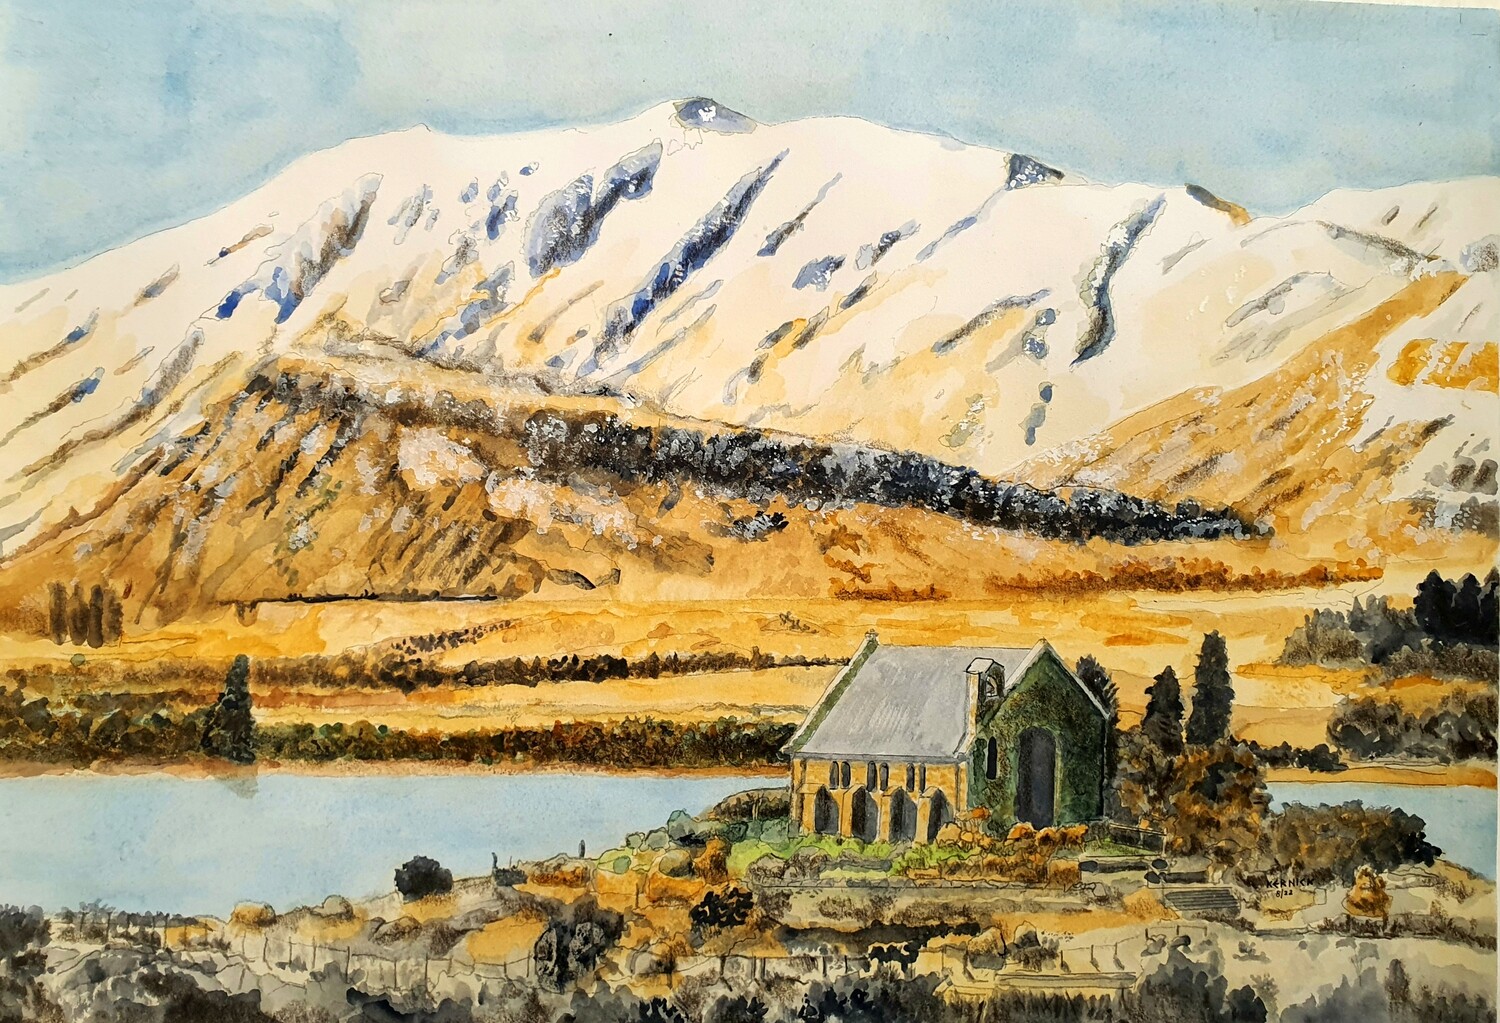 " Church of the Good Shepherd, Lake Tekapo, NZ"-High Quality Art Print